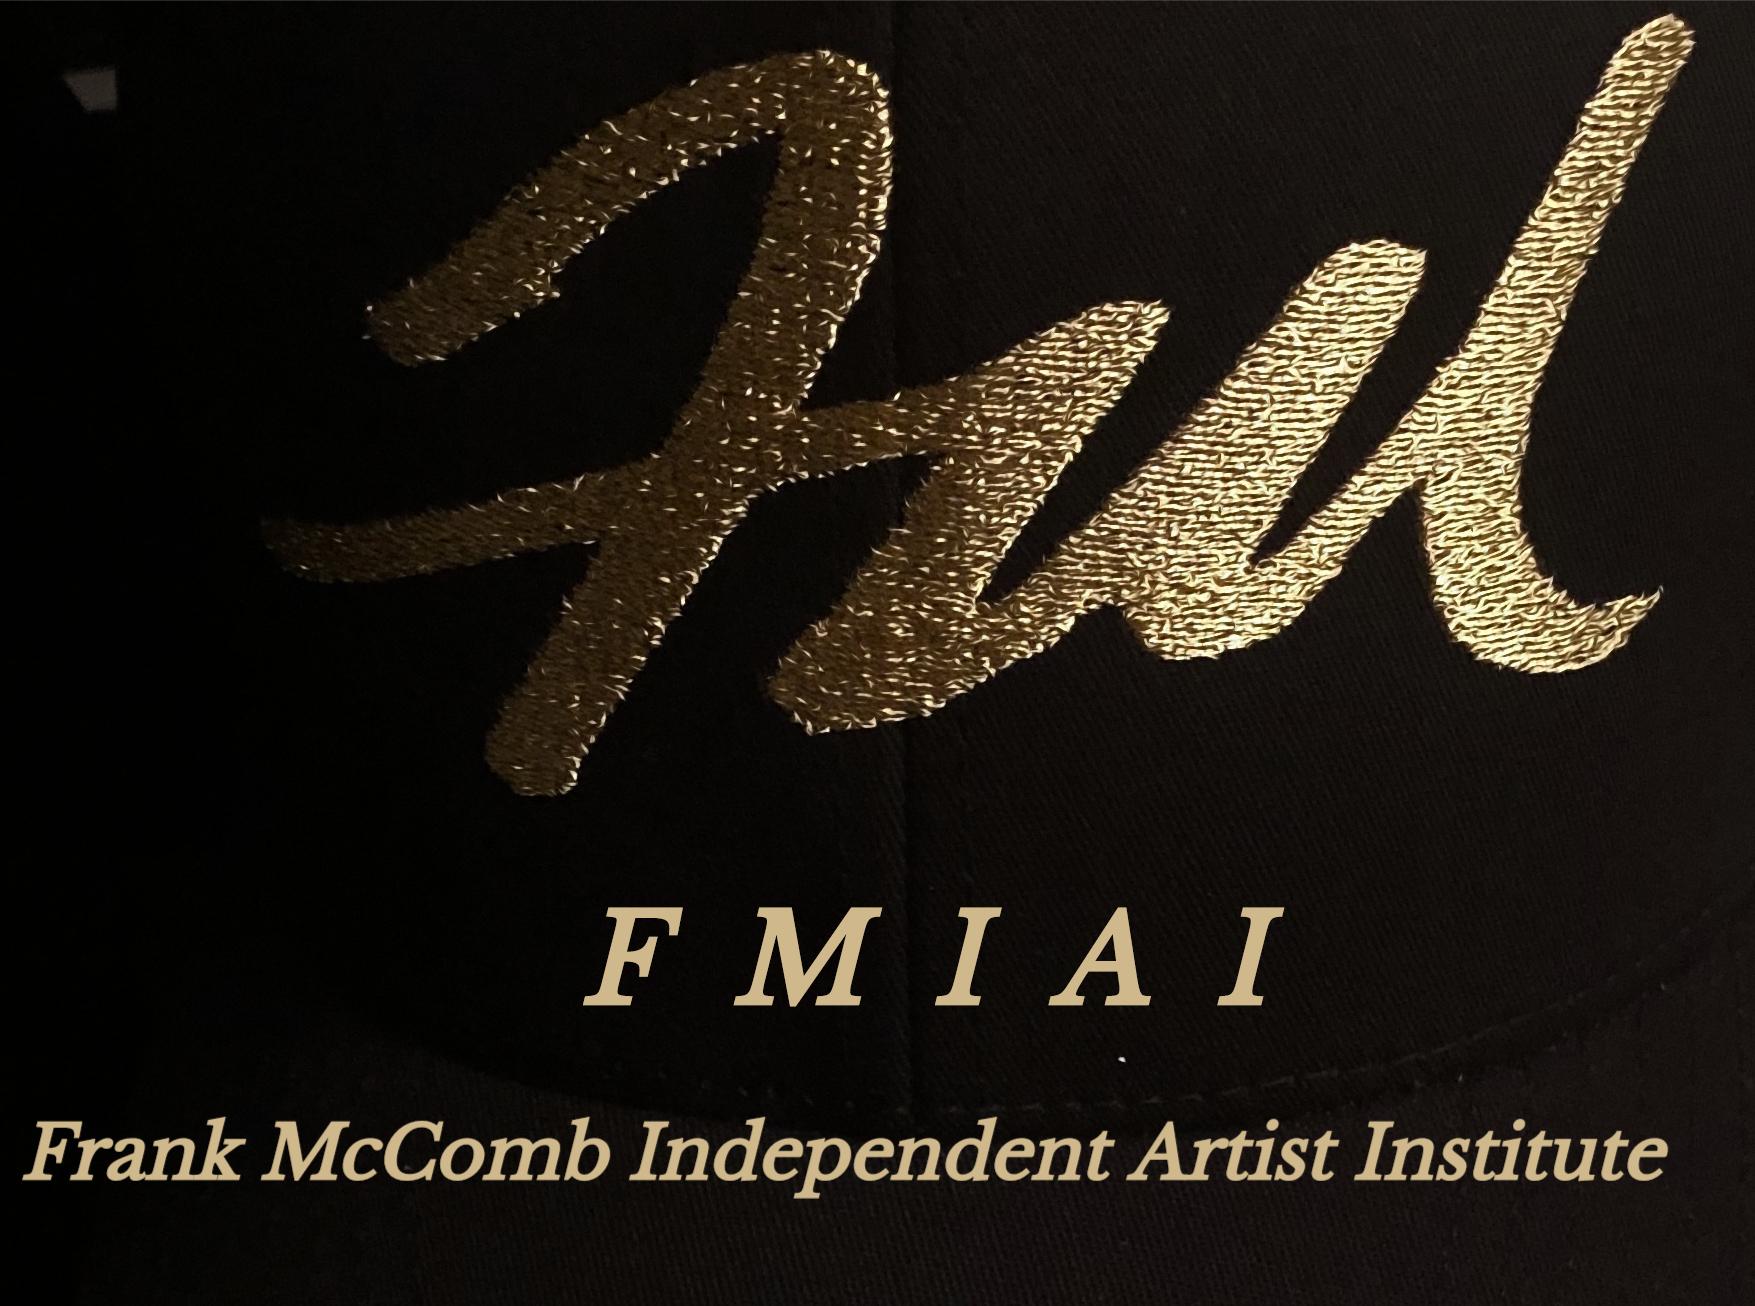 FMIAI: The Frank McComb Independent Artist Institute